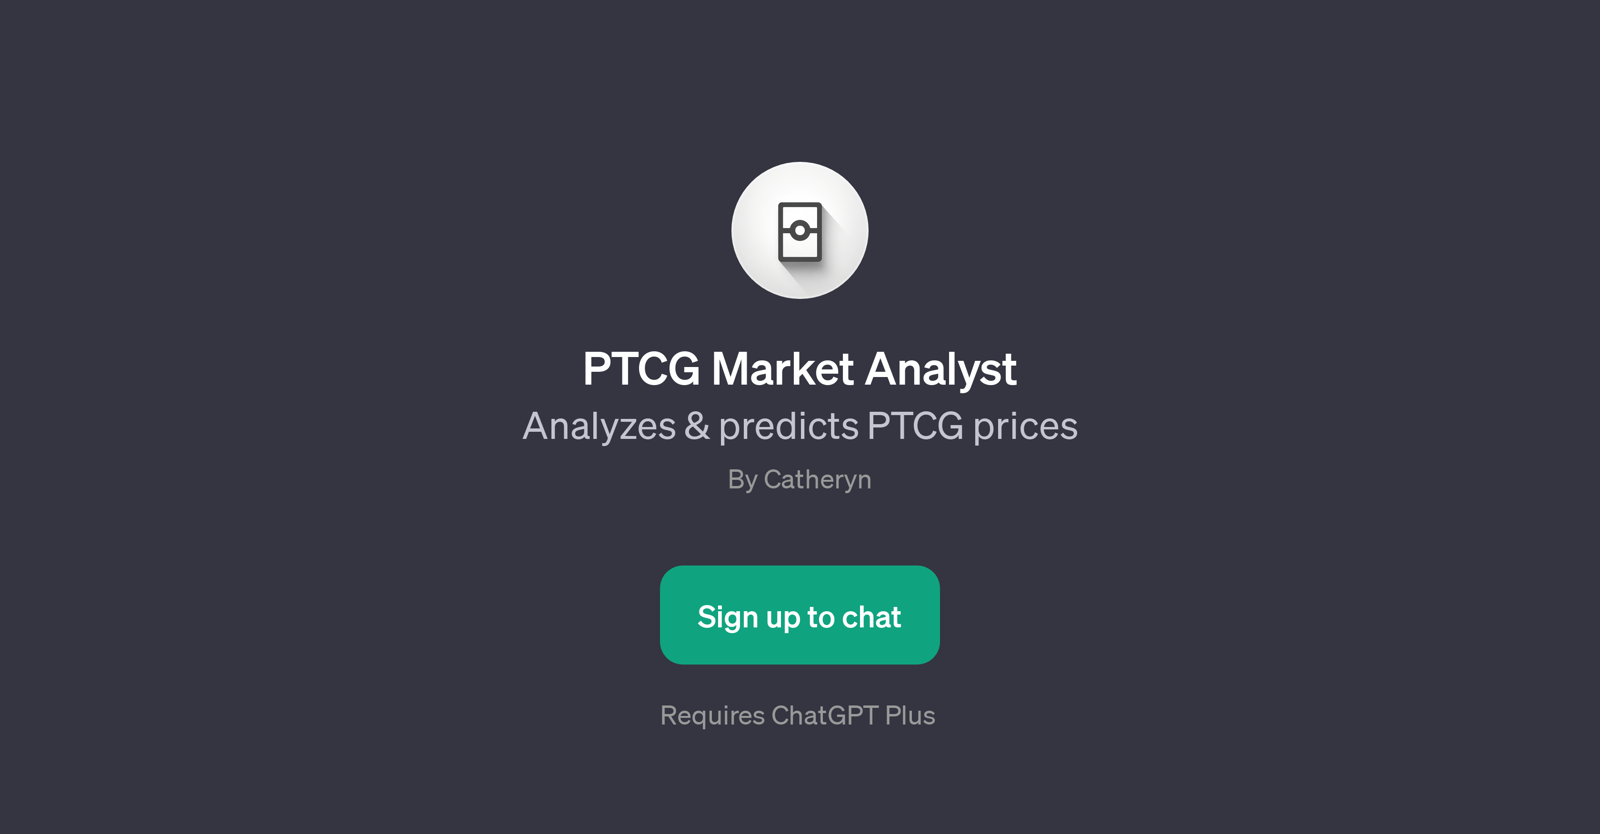 PTCG Market Analyst website